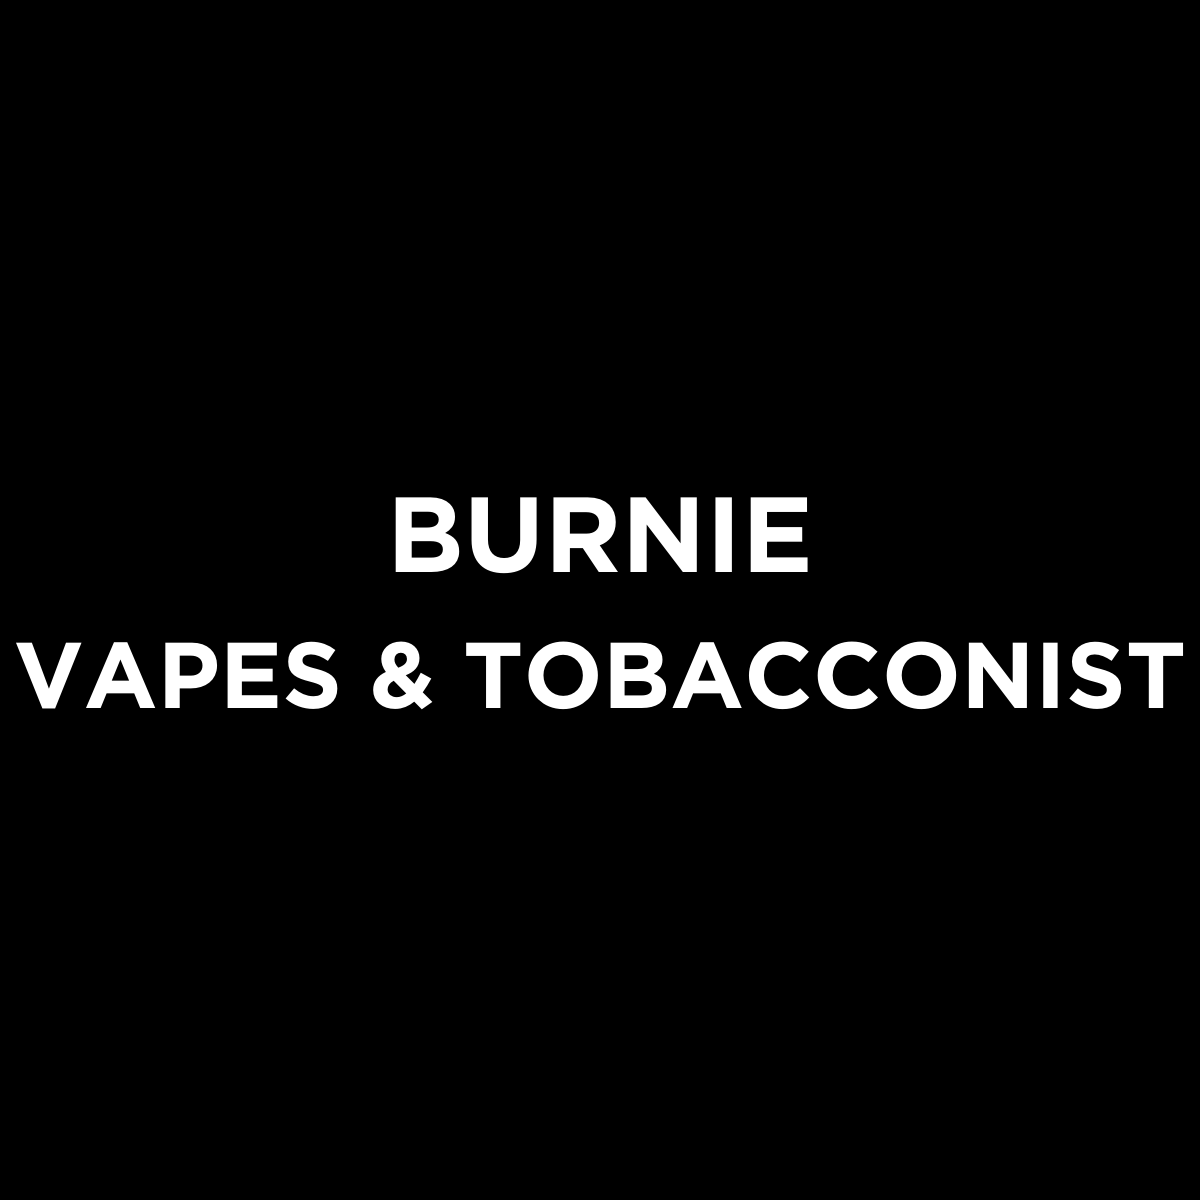 Burnie Vapes & Tobacconist